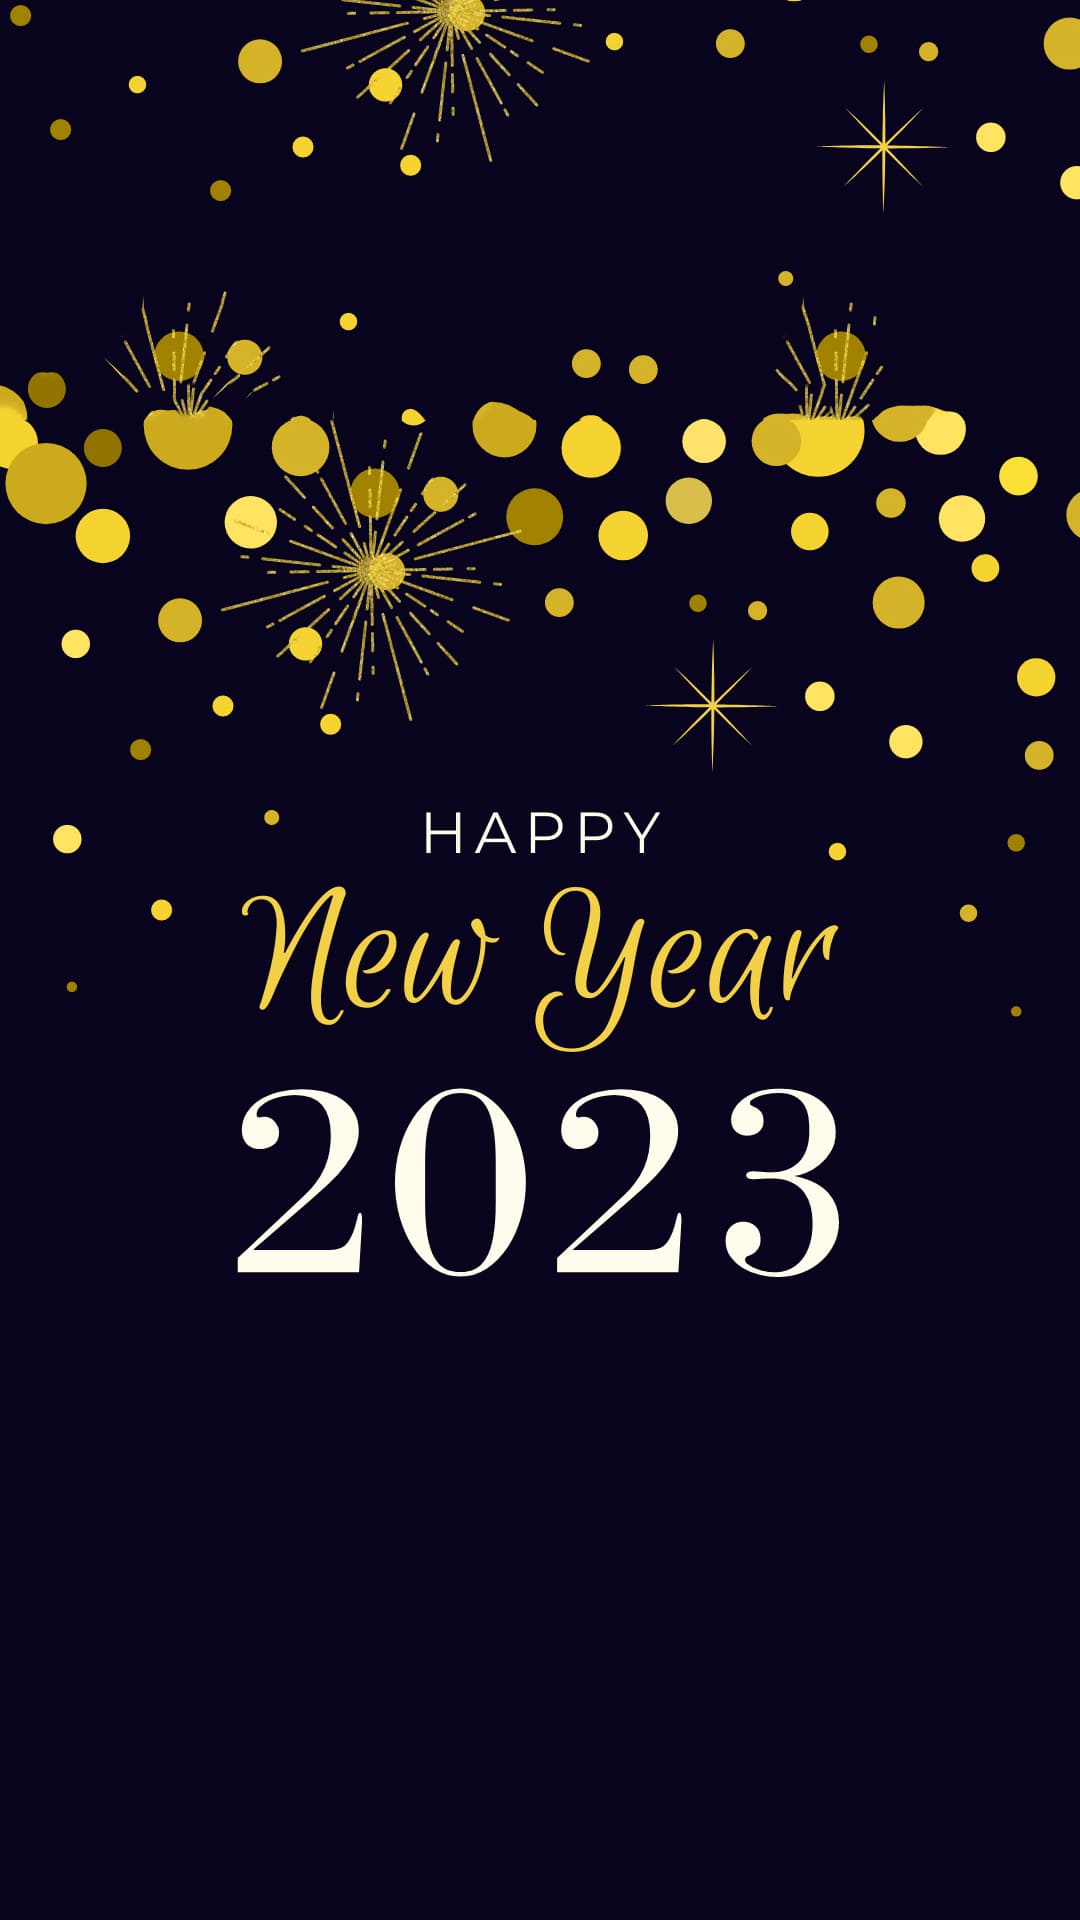 2023 New Year Wallpapers - TubeWP